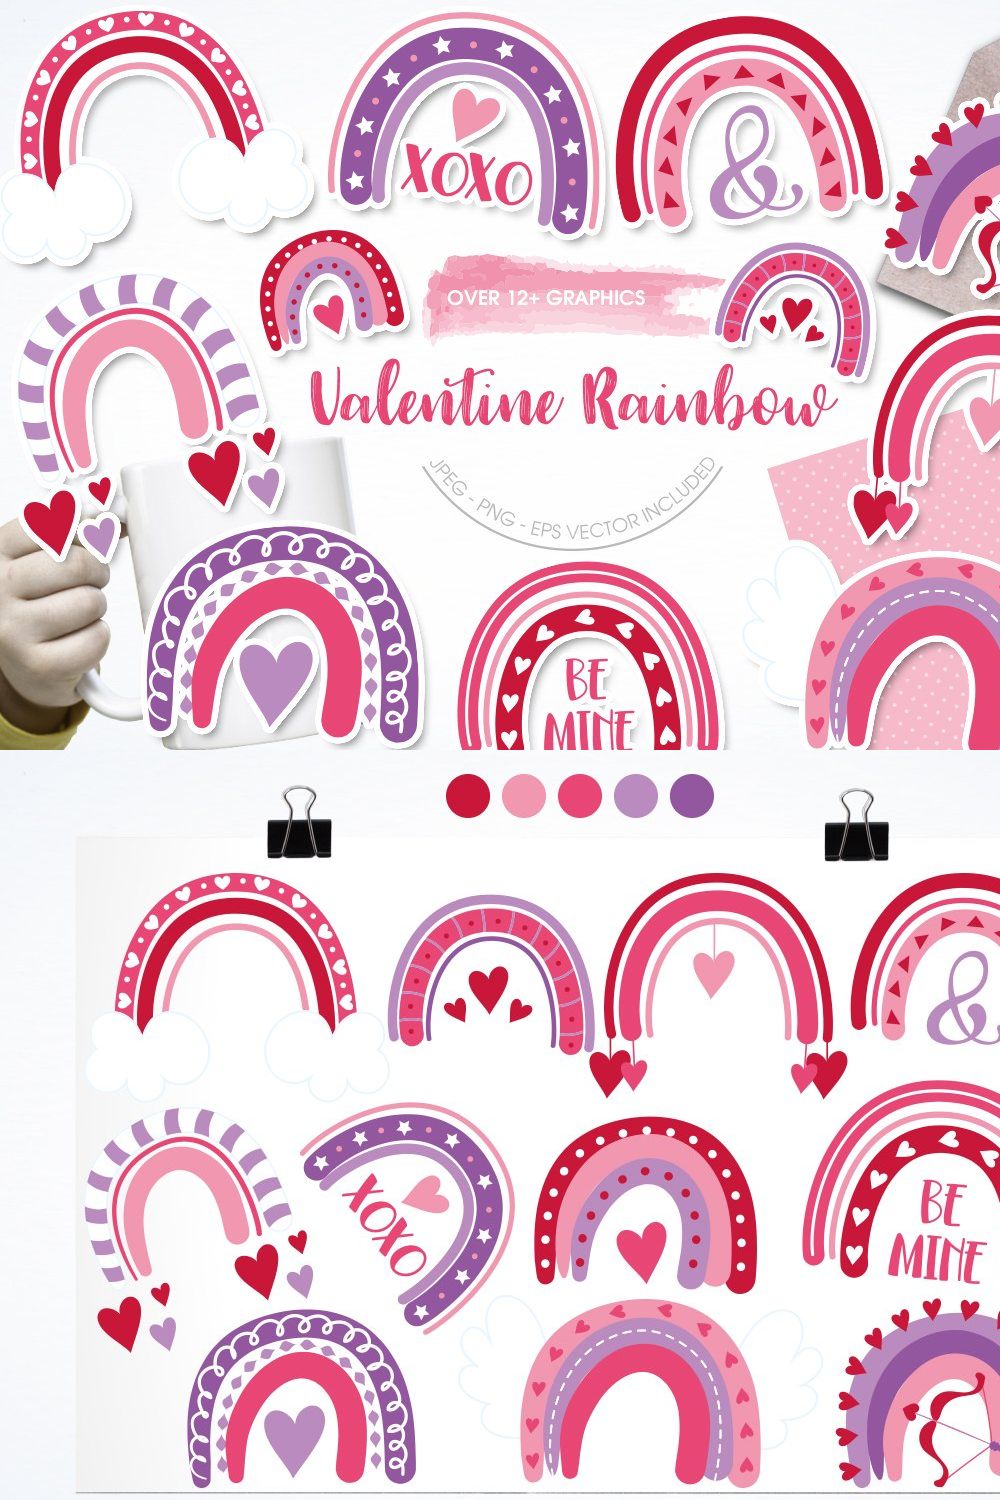 Valentine Rainbow pinterest preview image.